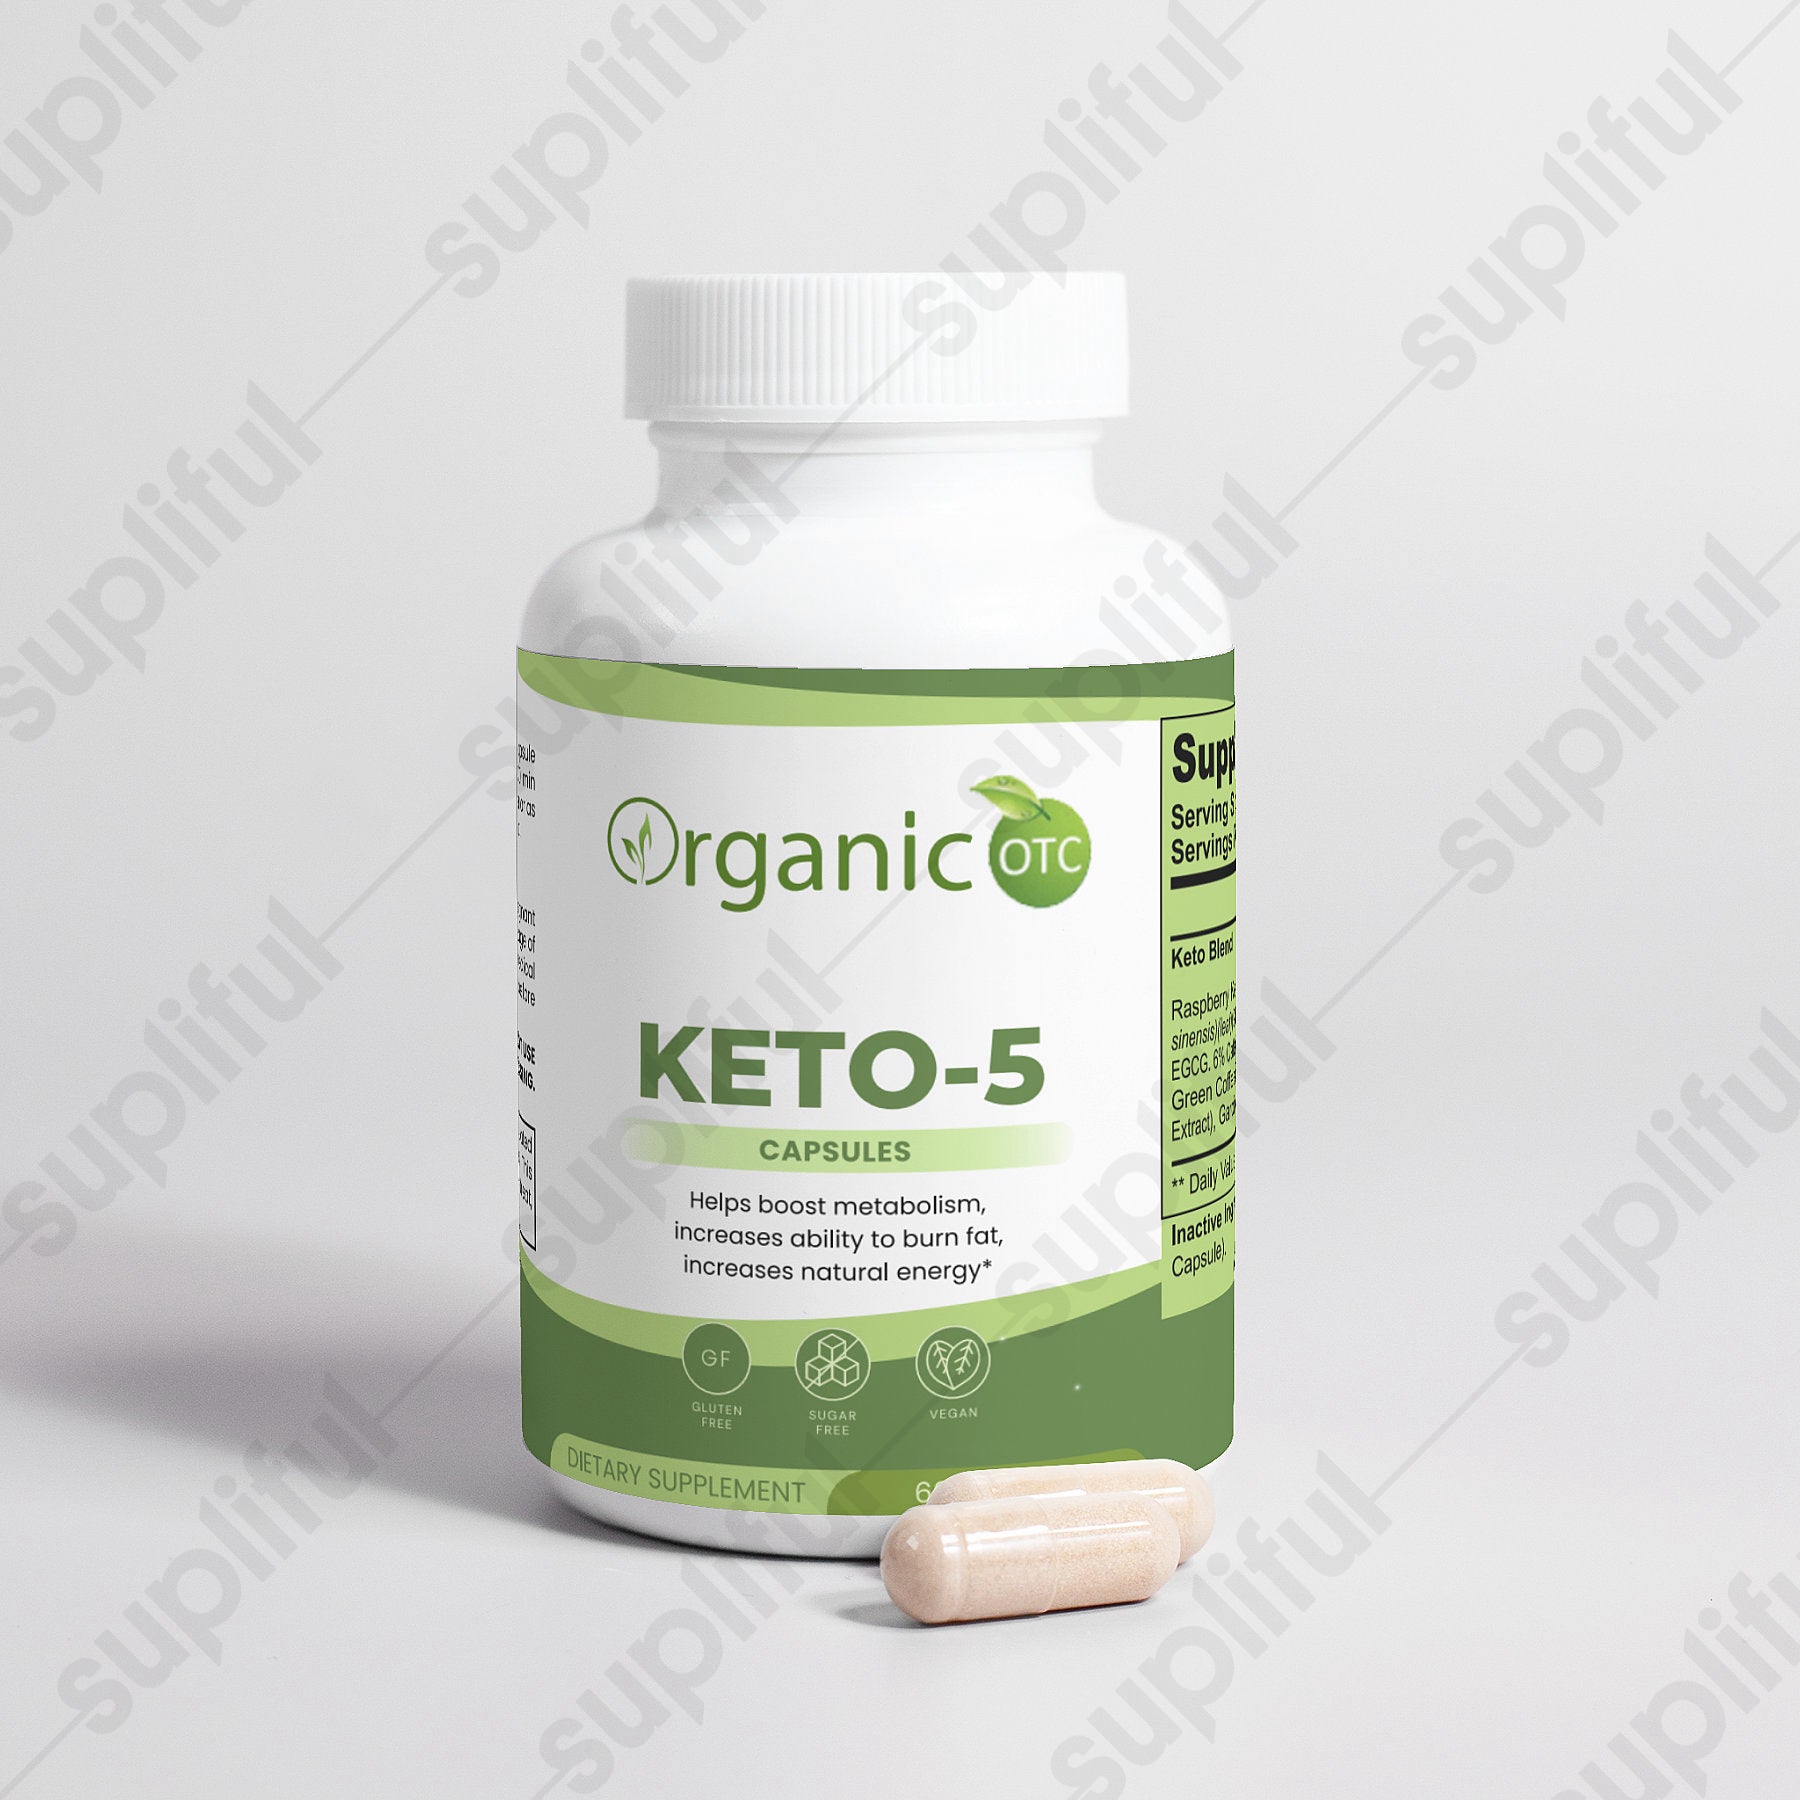 Keto-5 - Organic OTC